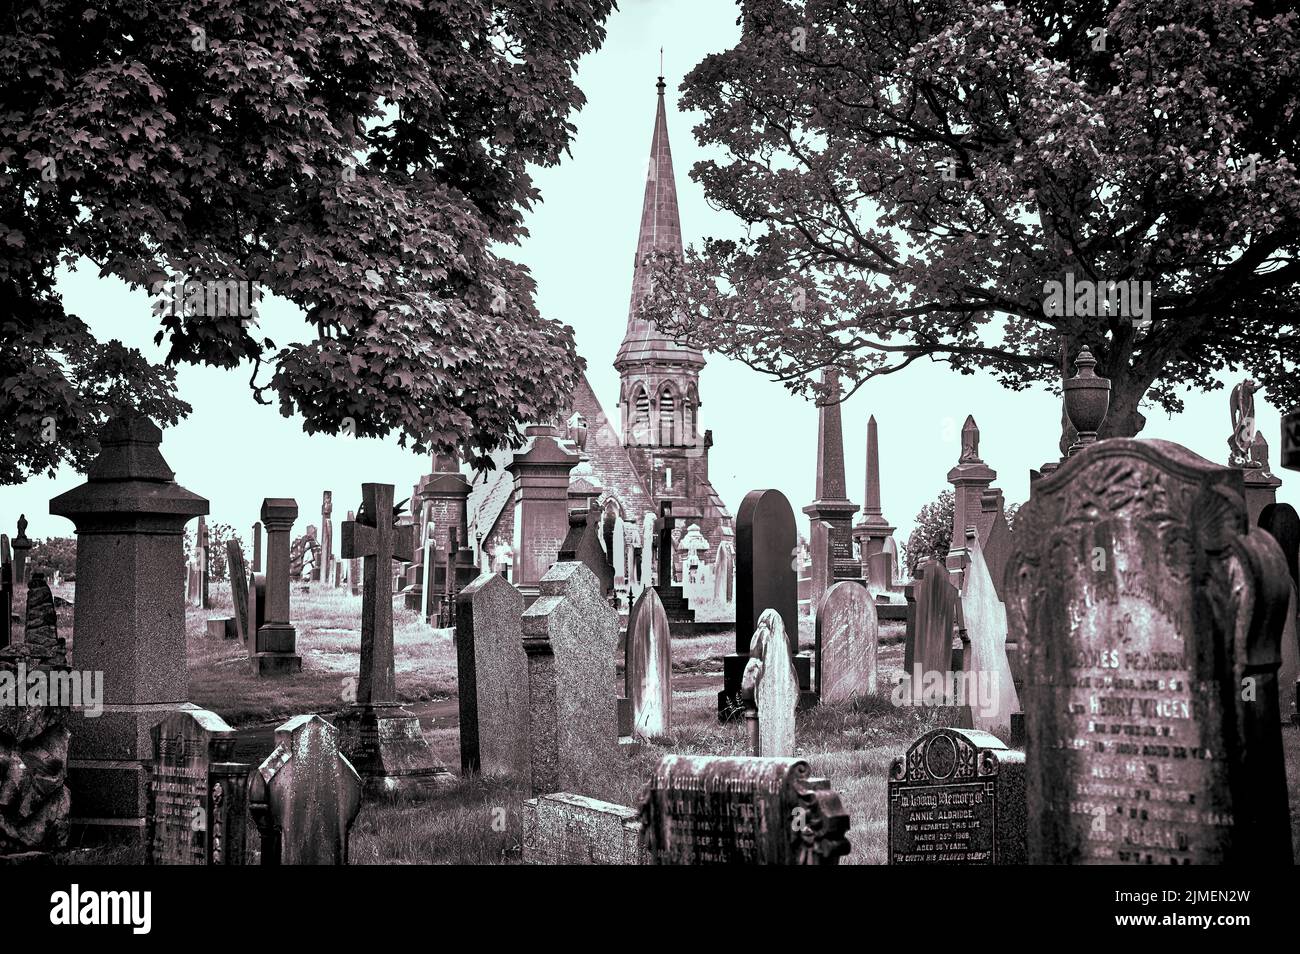 Layton cemetry gravestones and mortuary chapel Stock Photo